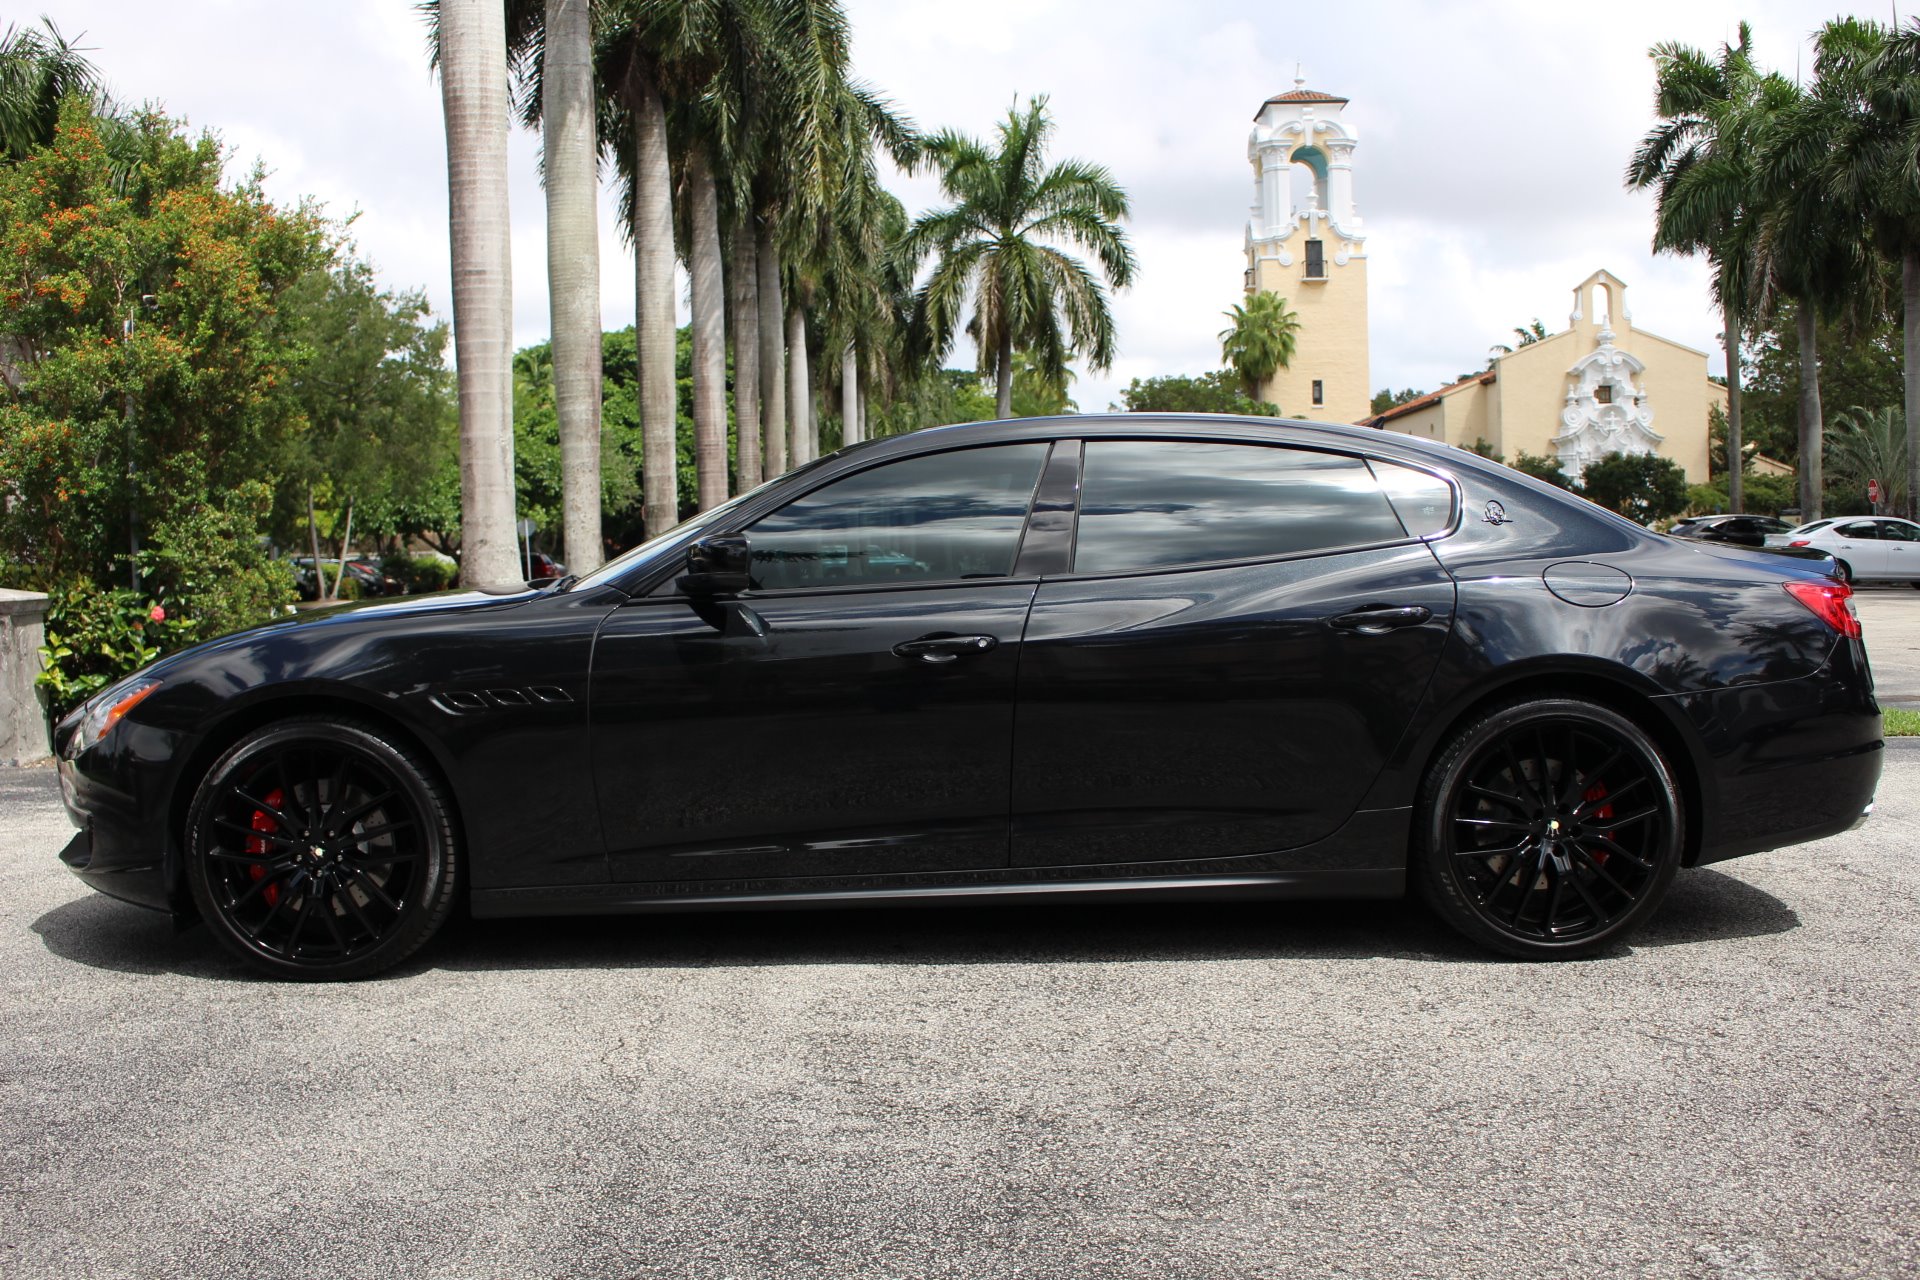 Used 2016 Maserati Quattroporte S for sale Sold at The Gables Sports Cars in Miami FL 33146 4